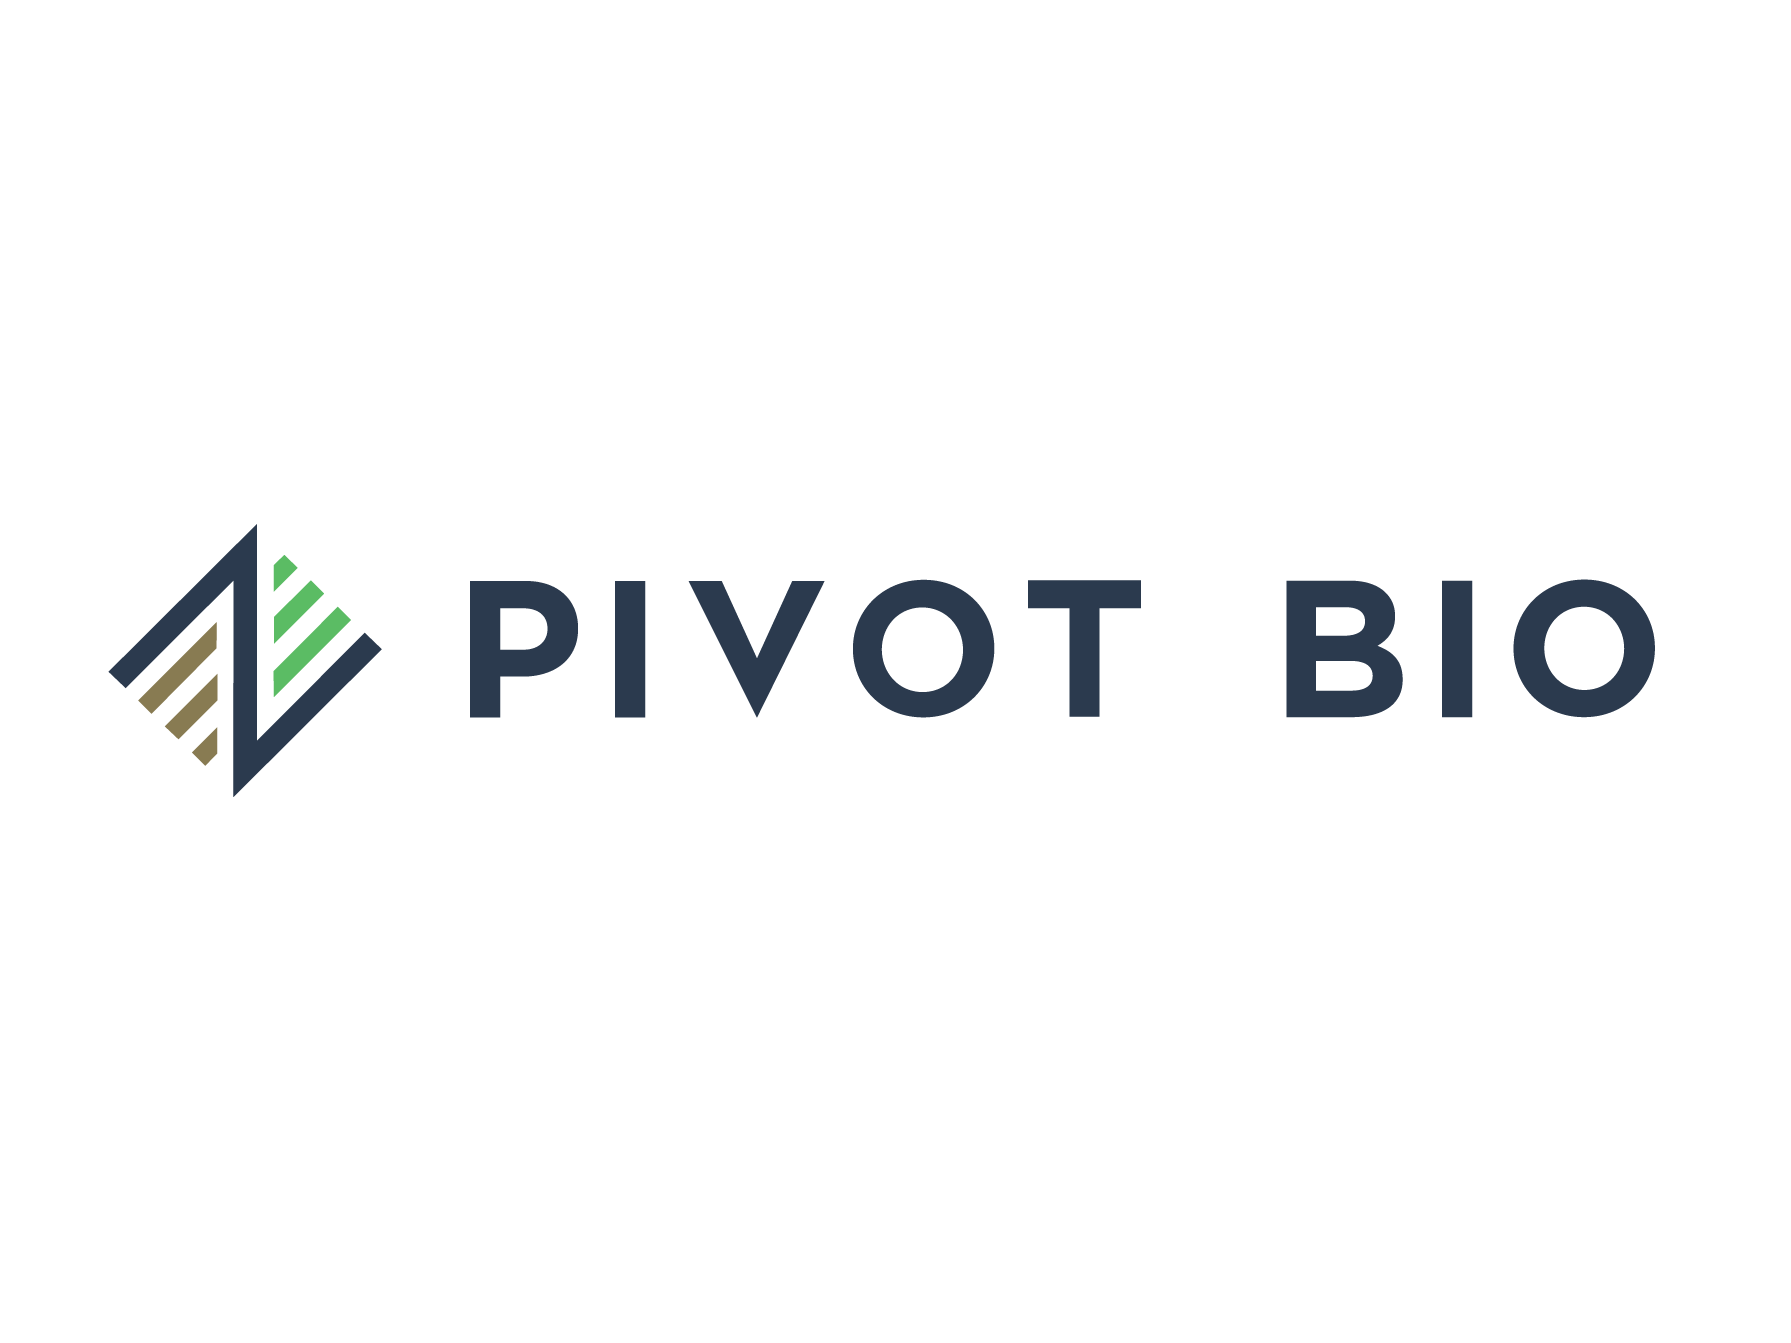 Pivot Bio 2021.png